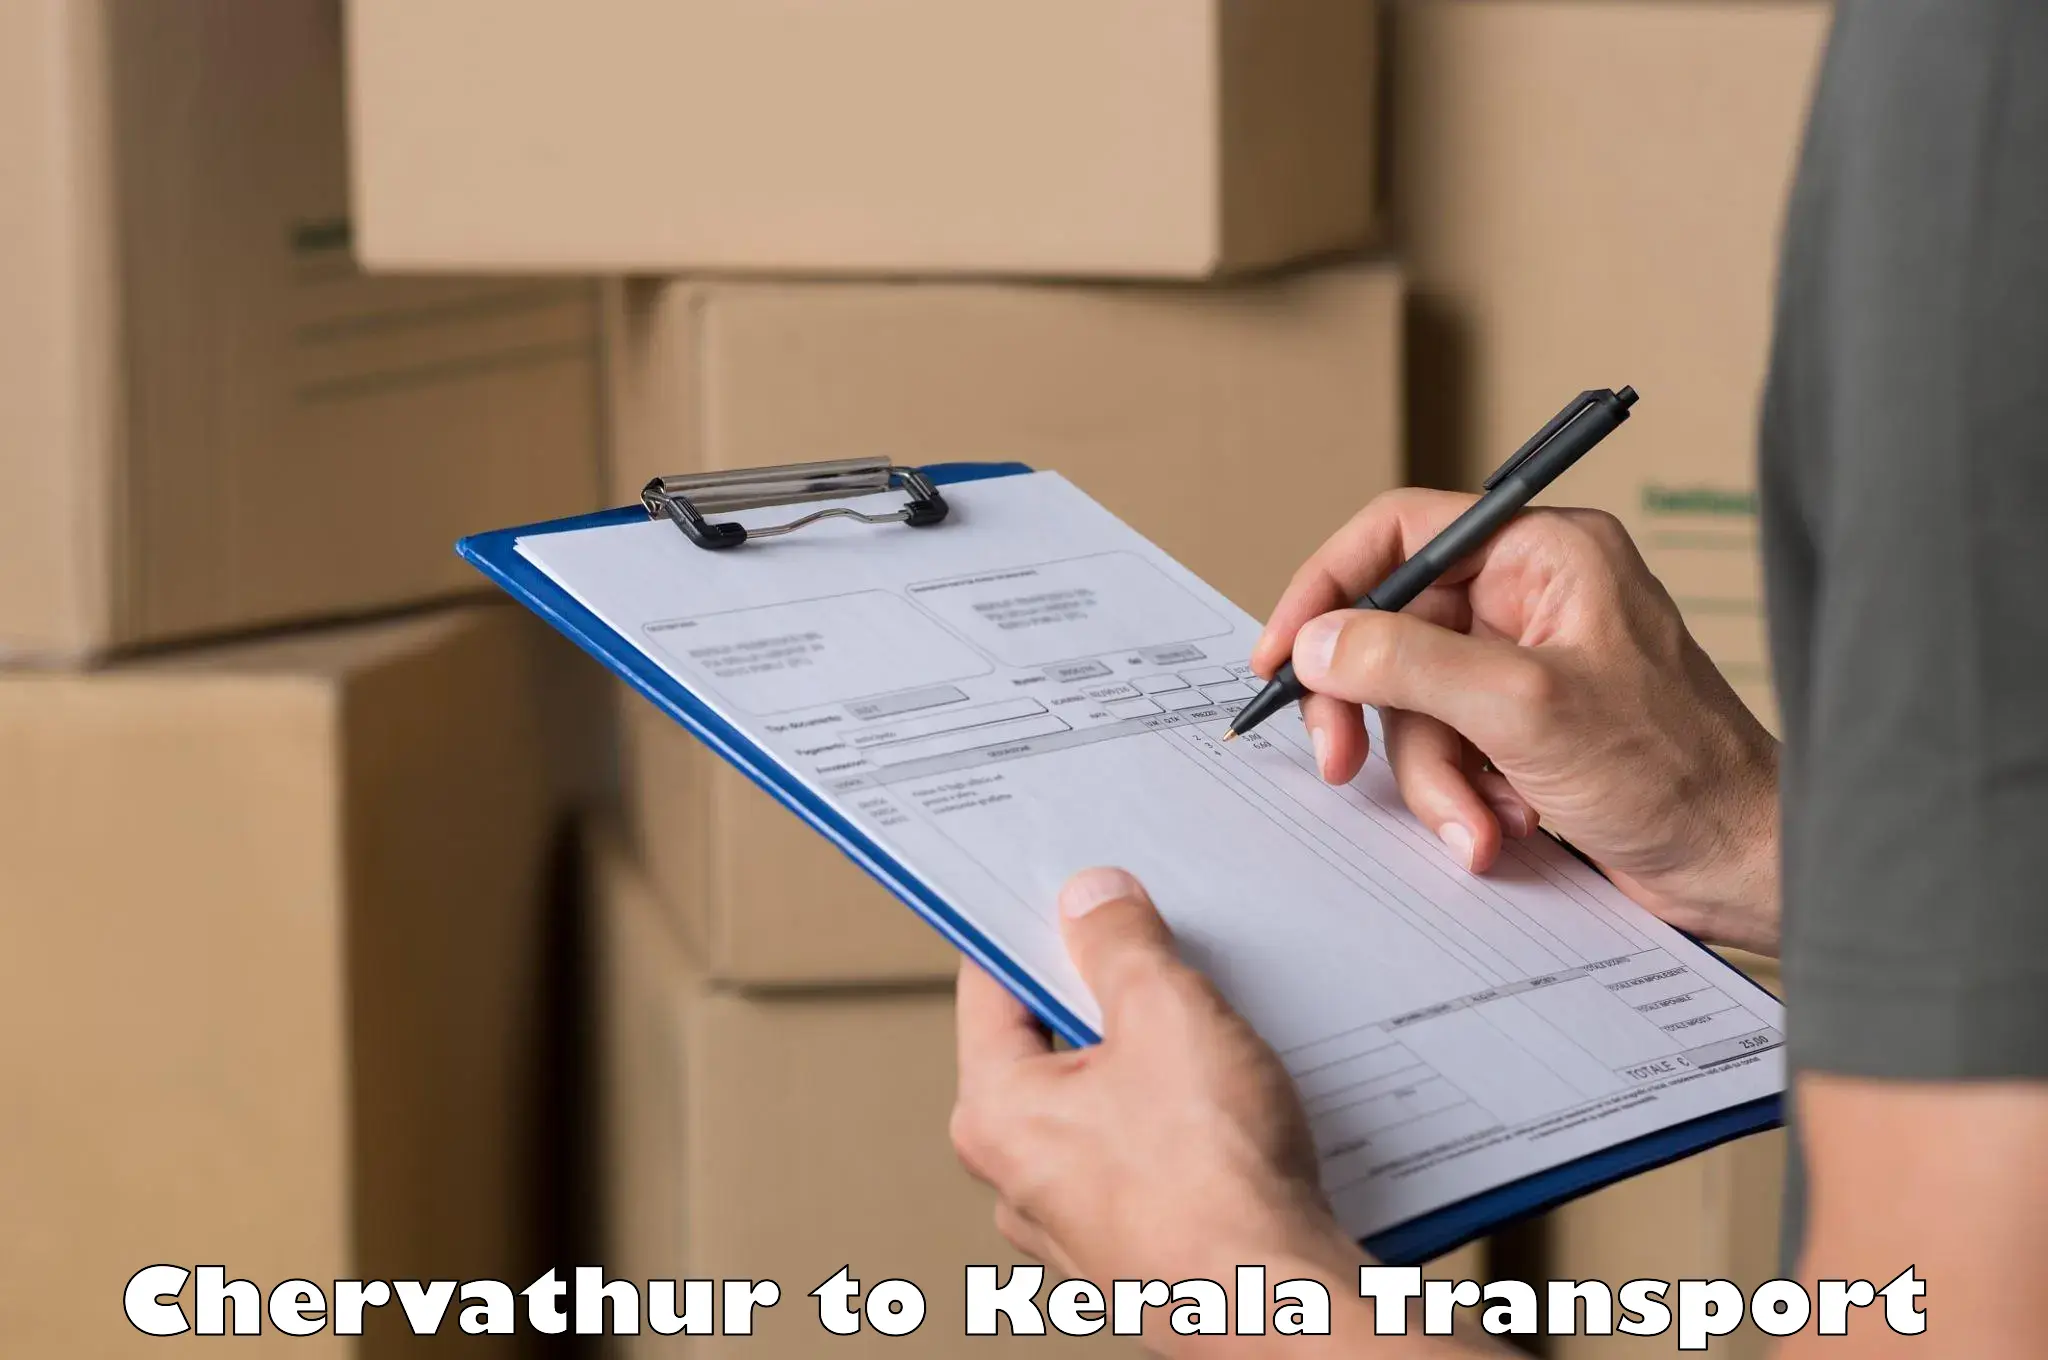 Online transport service Chervathur to Kottayam